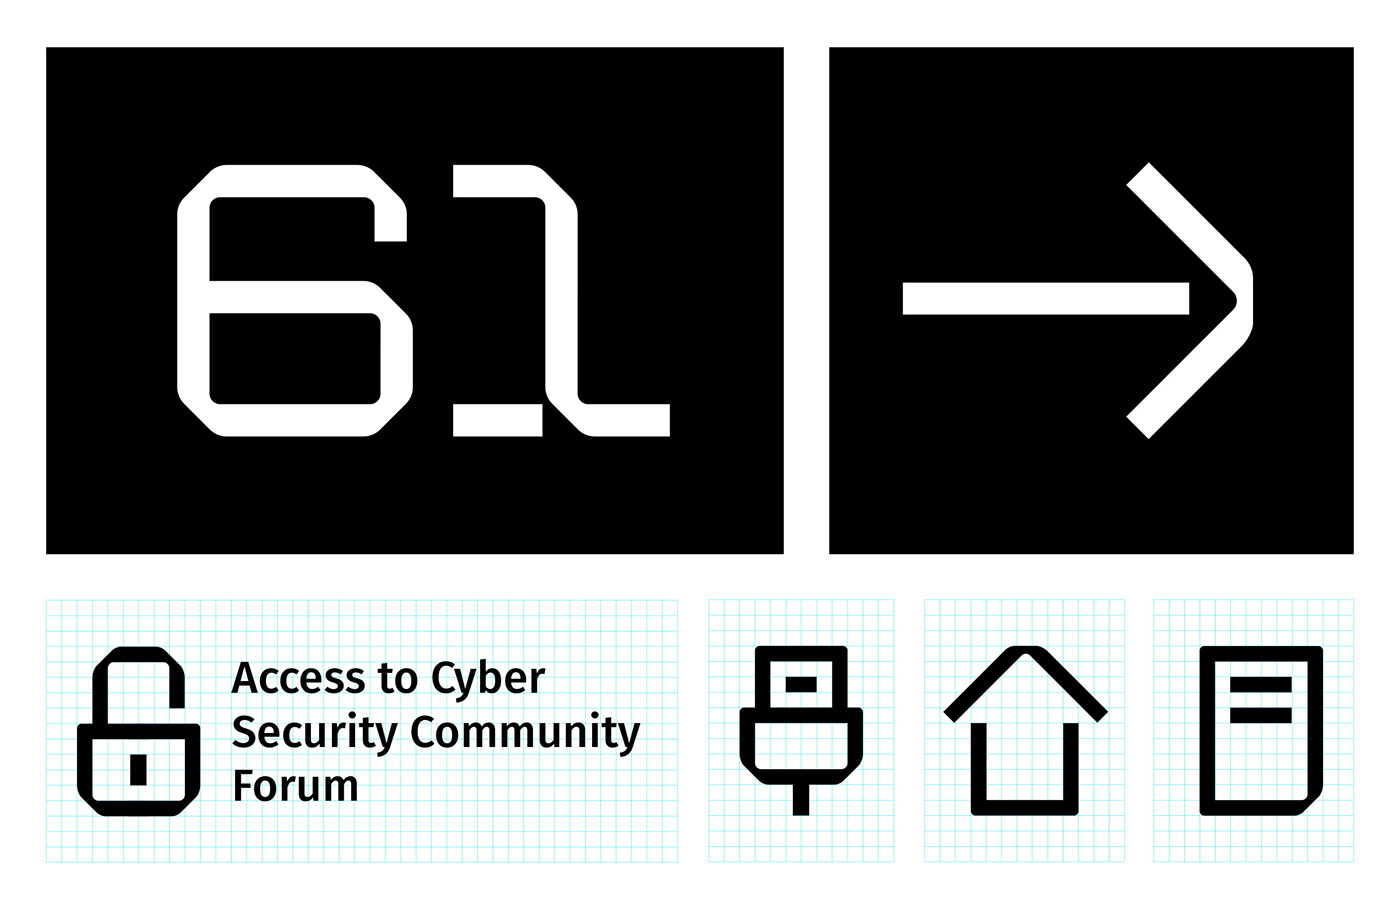 Cyber Security cybersecurity digital identity symbol